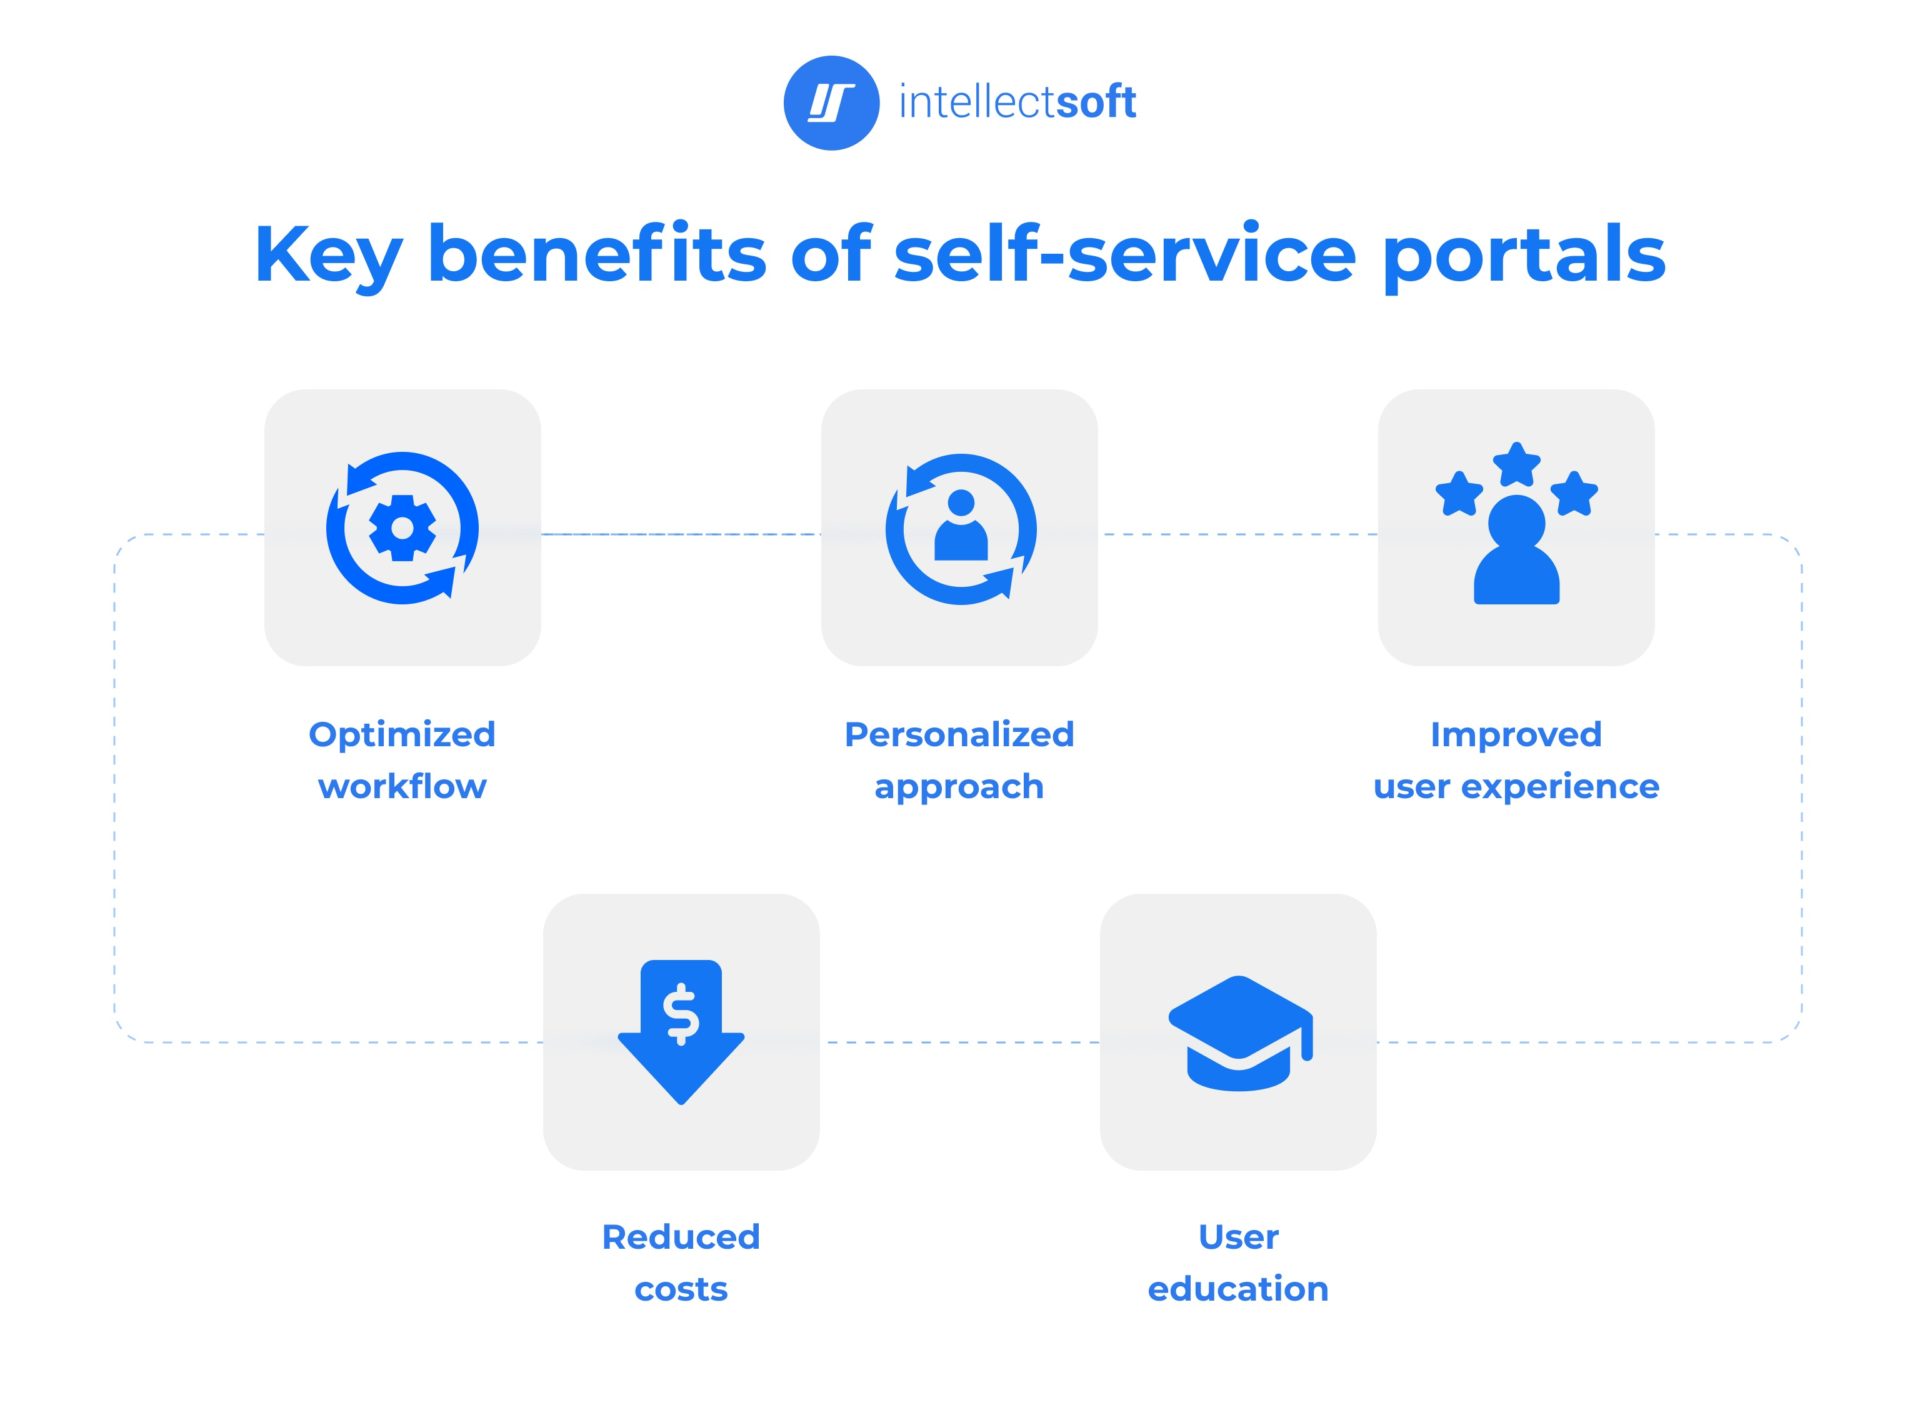 Self-service portal benefits